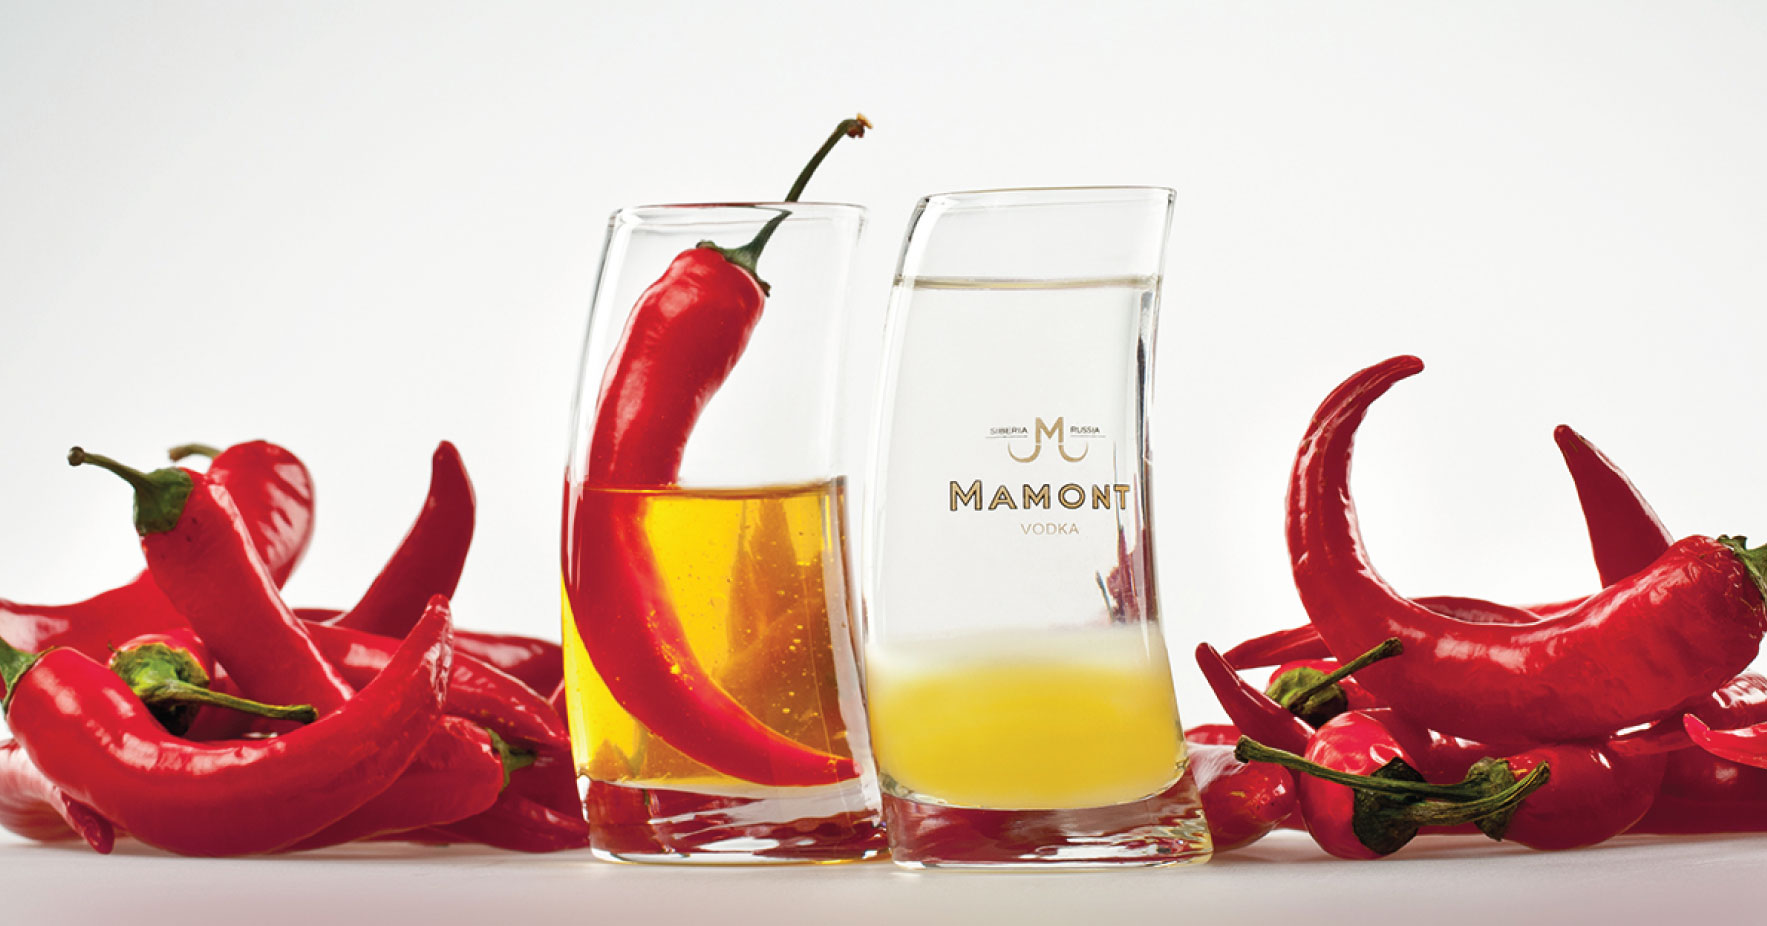 Choose adventure with Mamont Vodka shots #ChooseAdventure